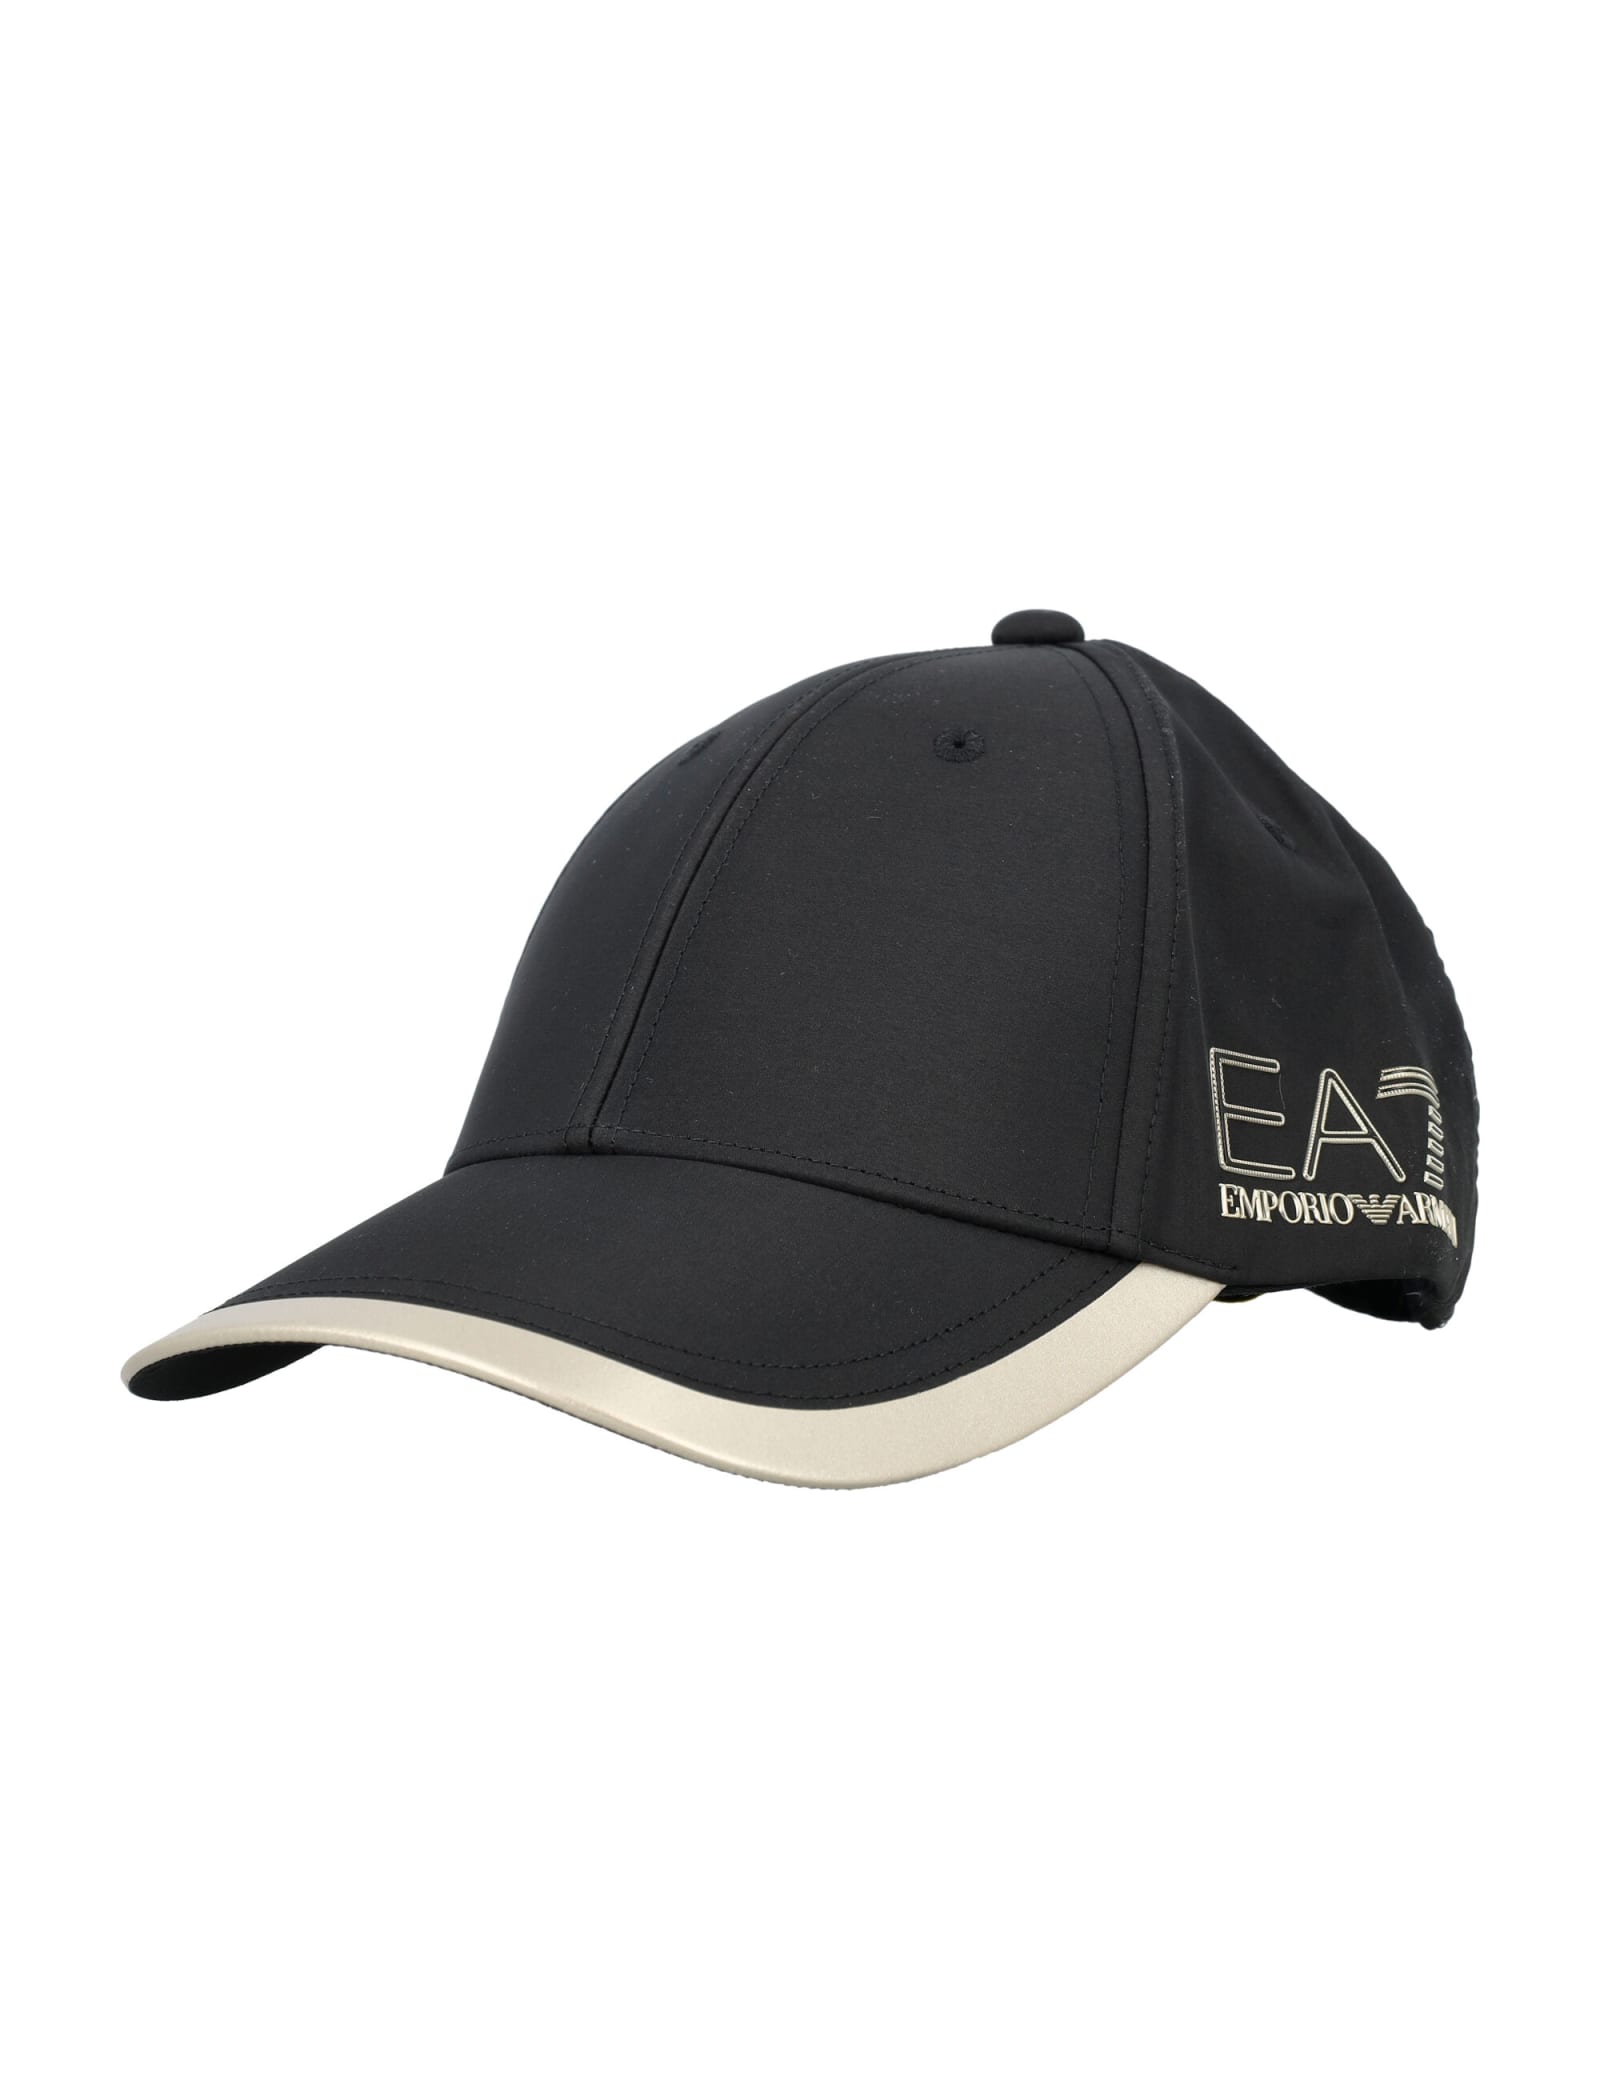 Ea7 Gold Label Baseball Cap In Black